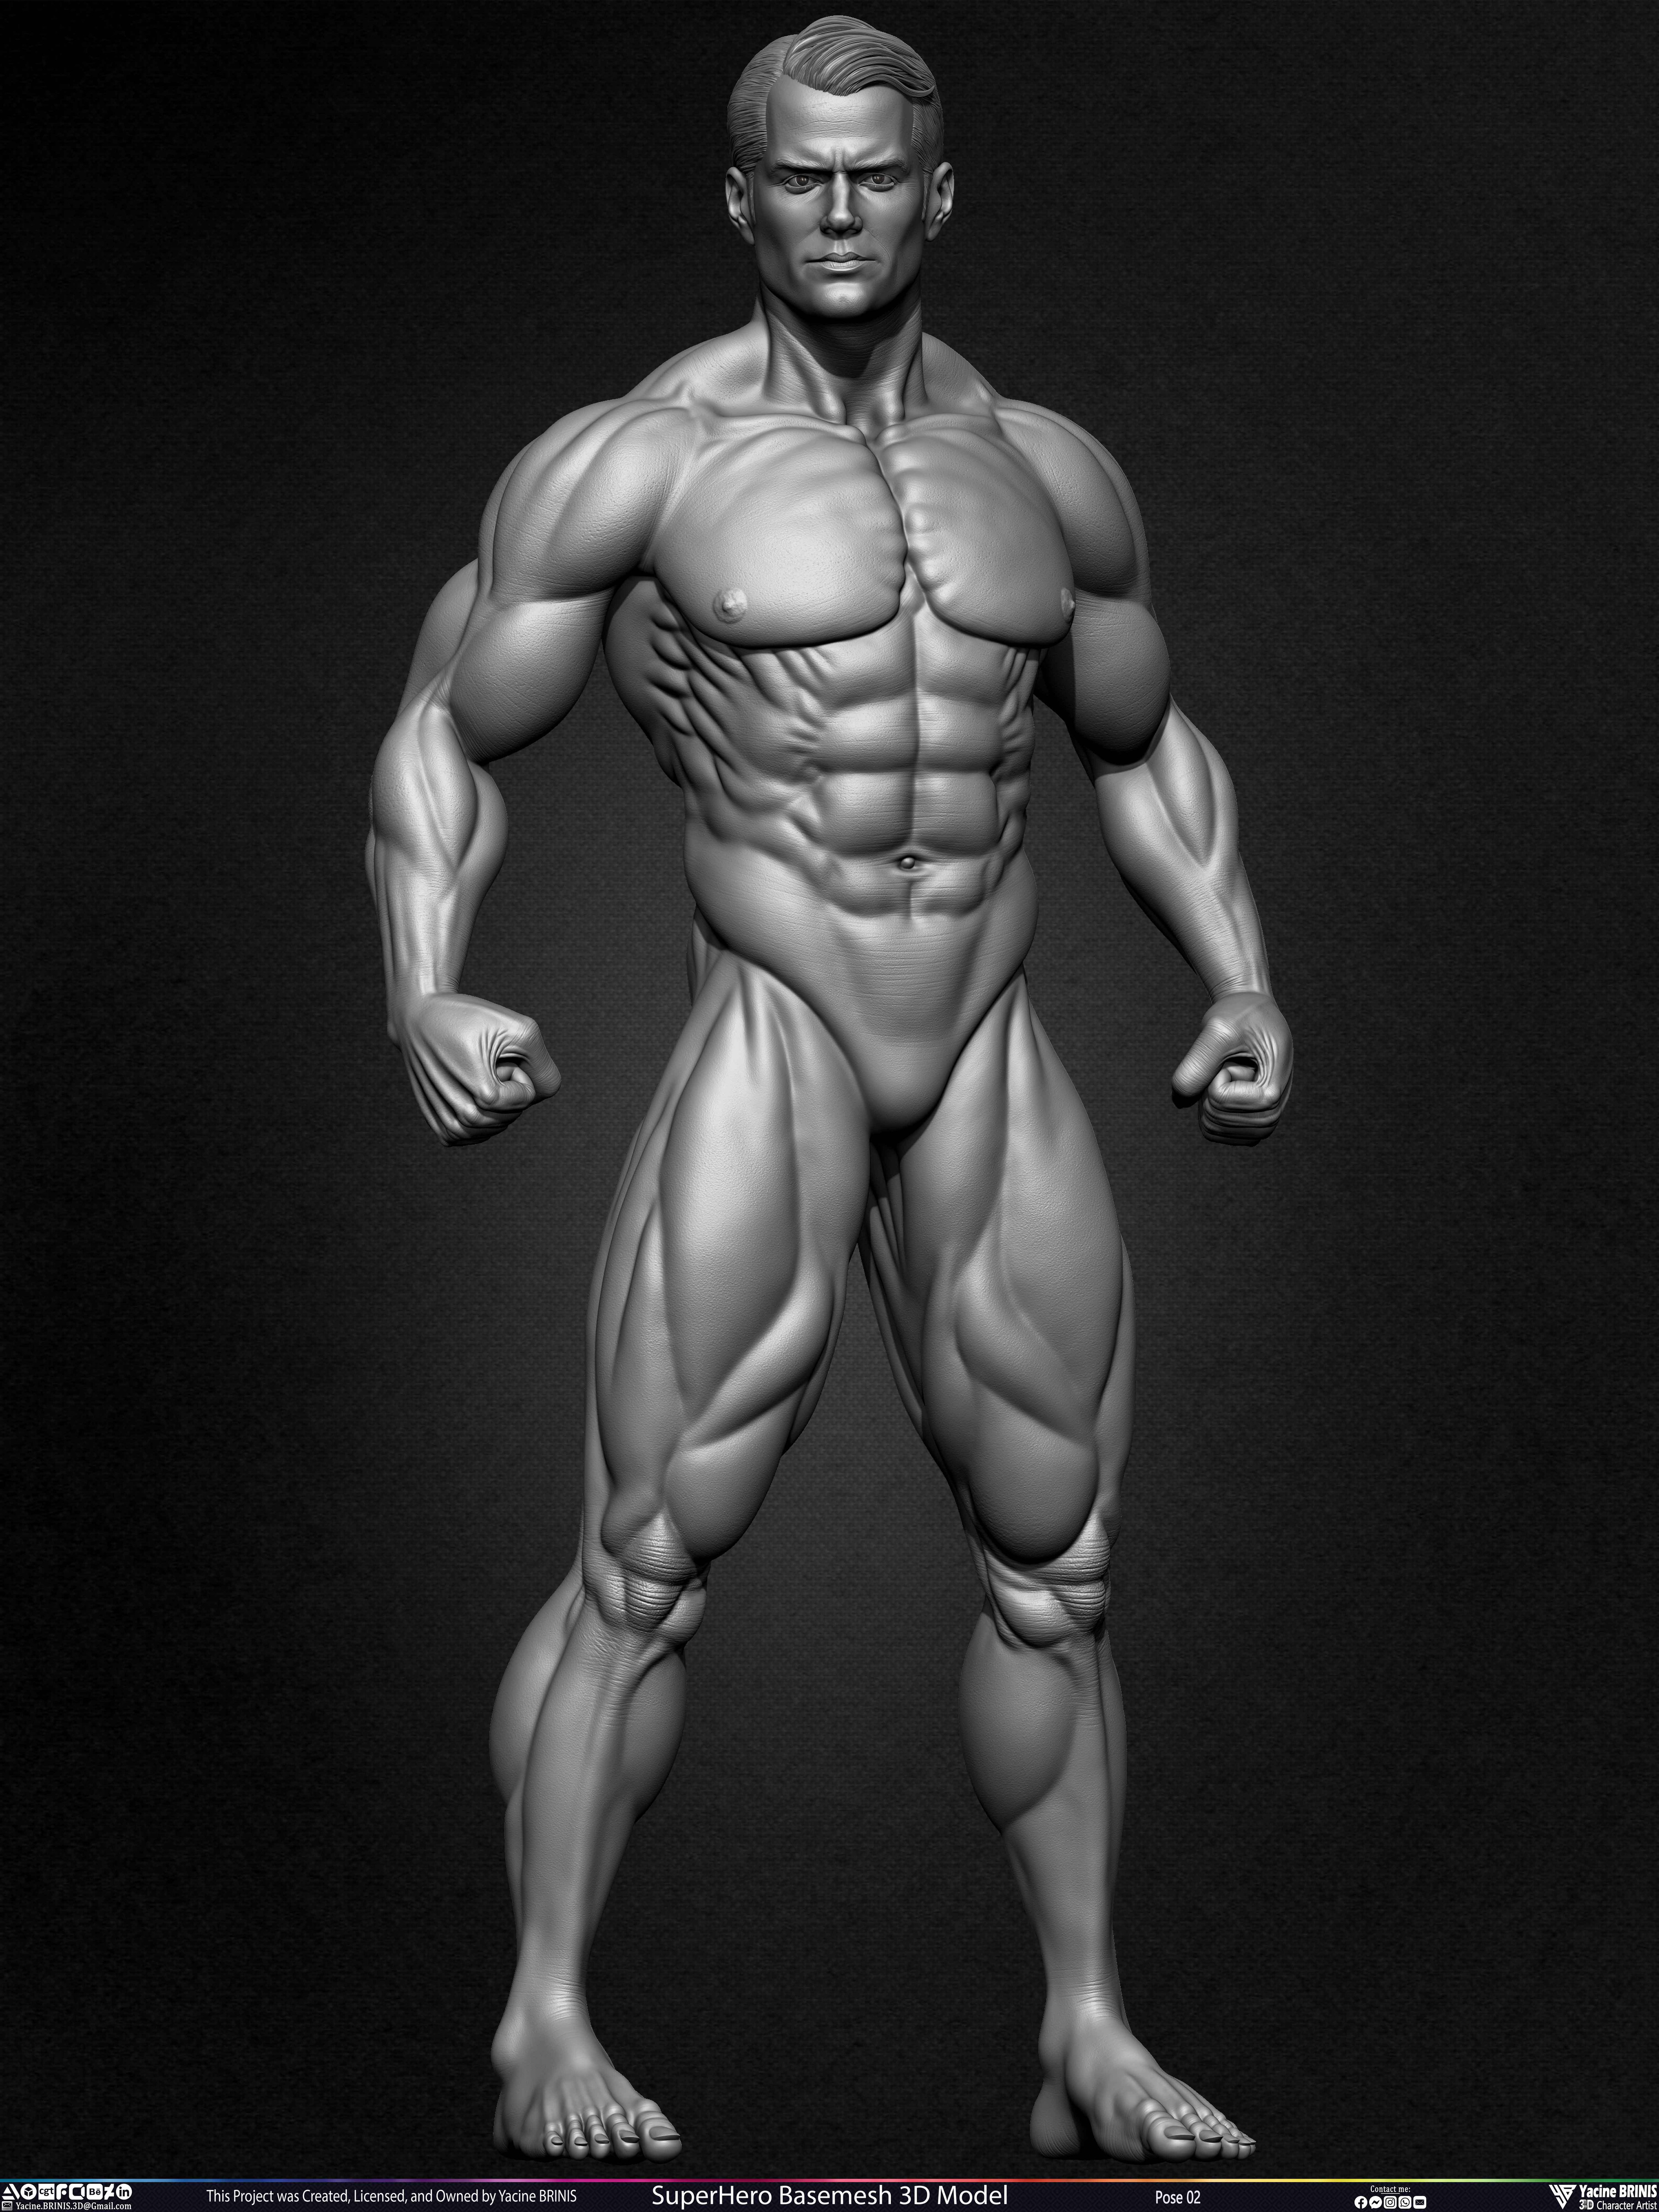 Super-Hero Basemesh 3D Model - Henry Cavill- Man of Steel - Superman - Pose 02 Sculpted by Yacine BRINIS Set 004